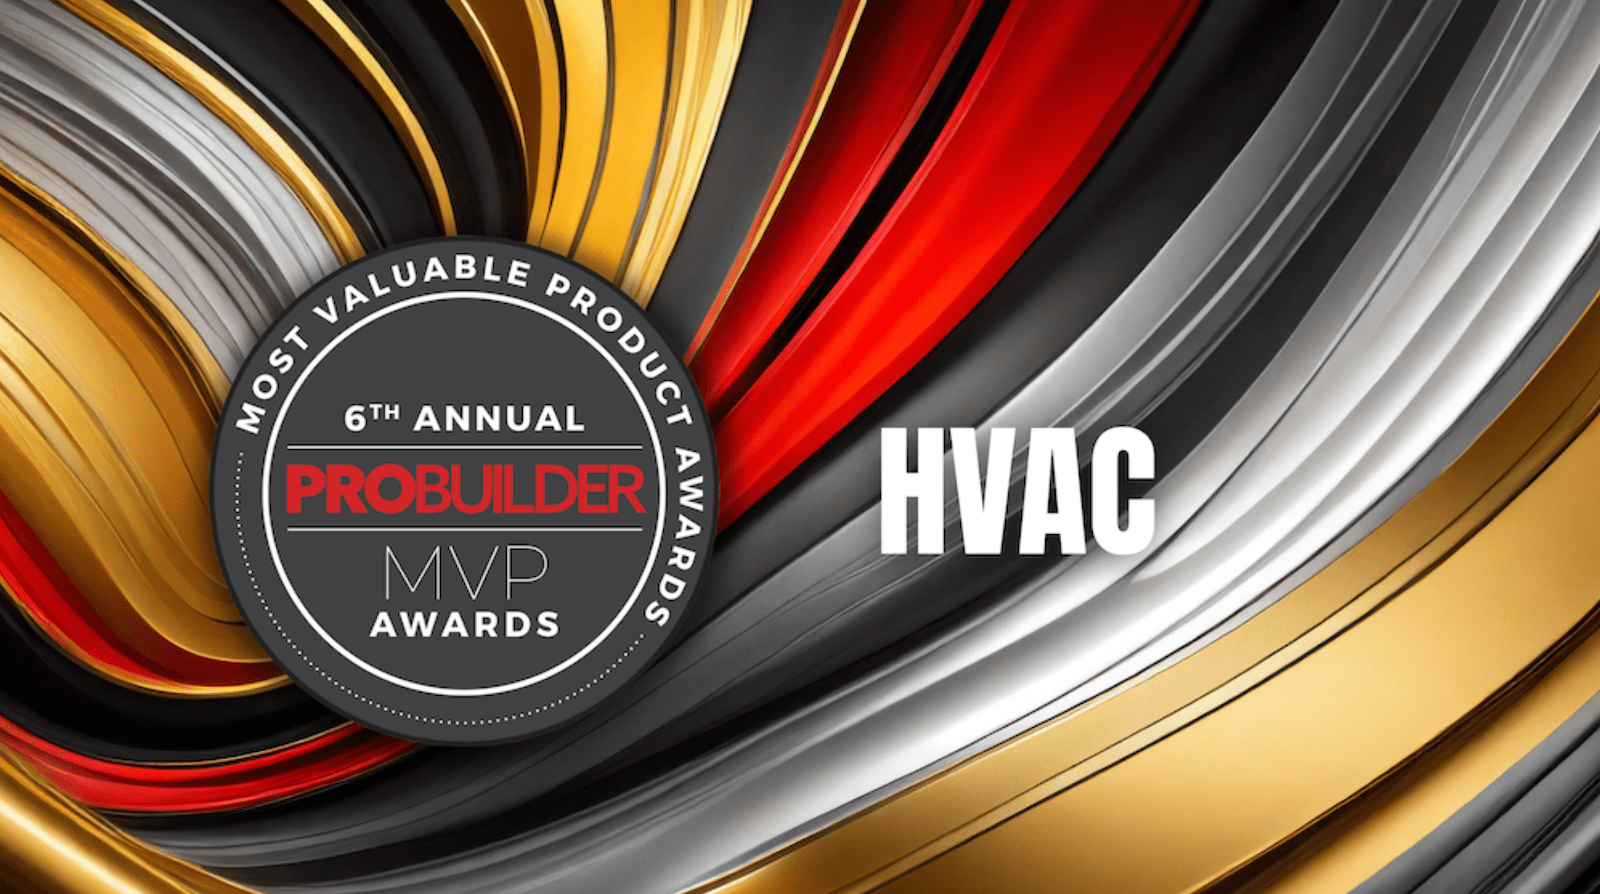 6th annual MVP Awards HVAC category